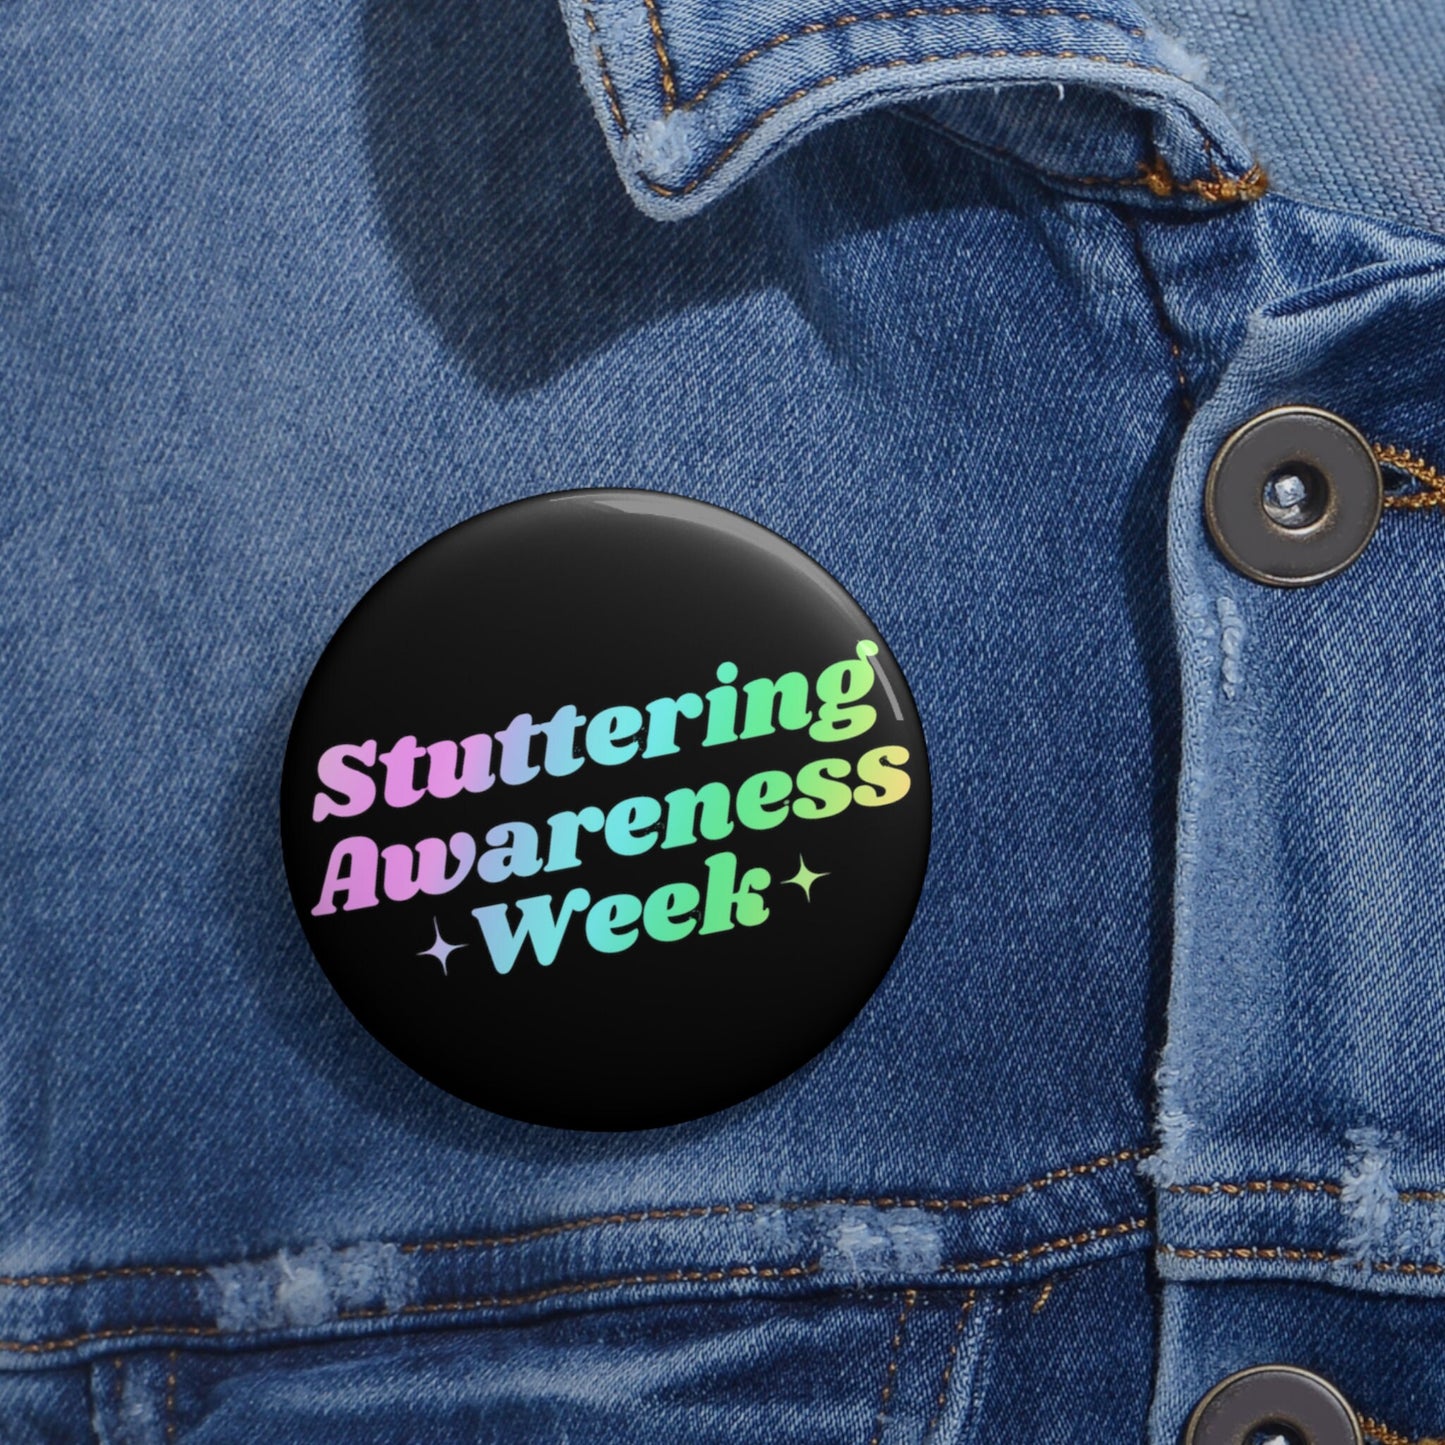 Stuttering Awareness Week Pin 1.25" 2.25" or 3"